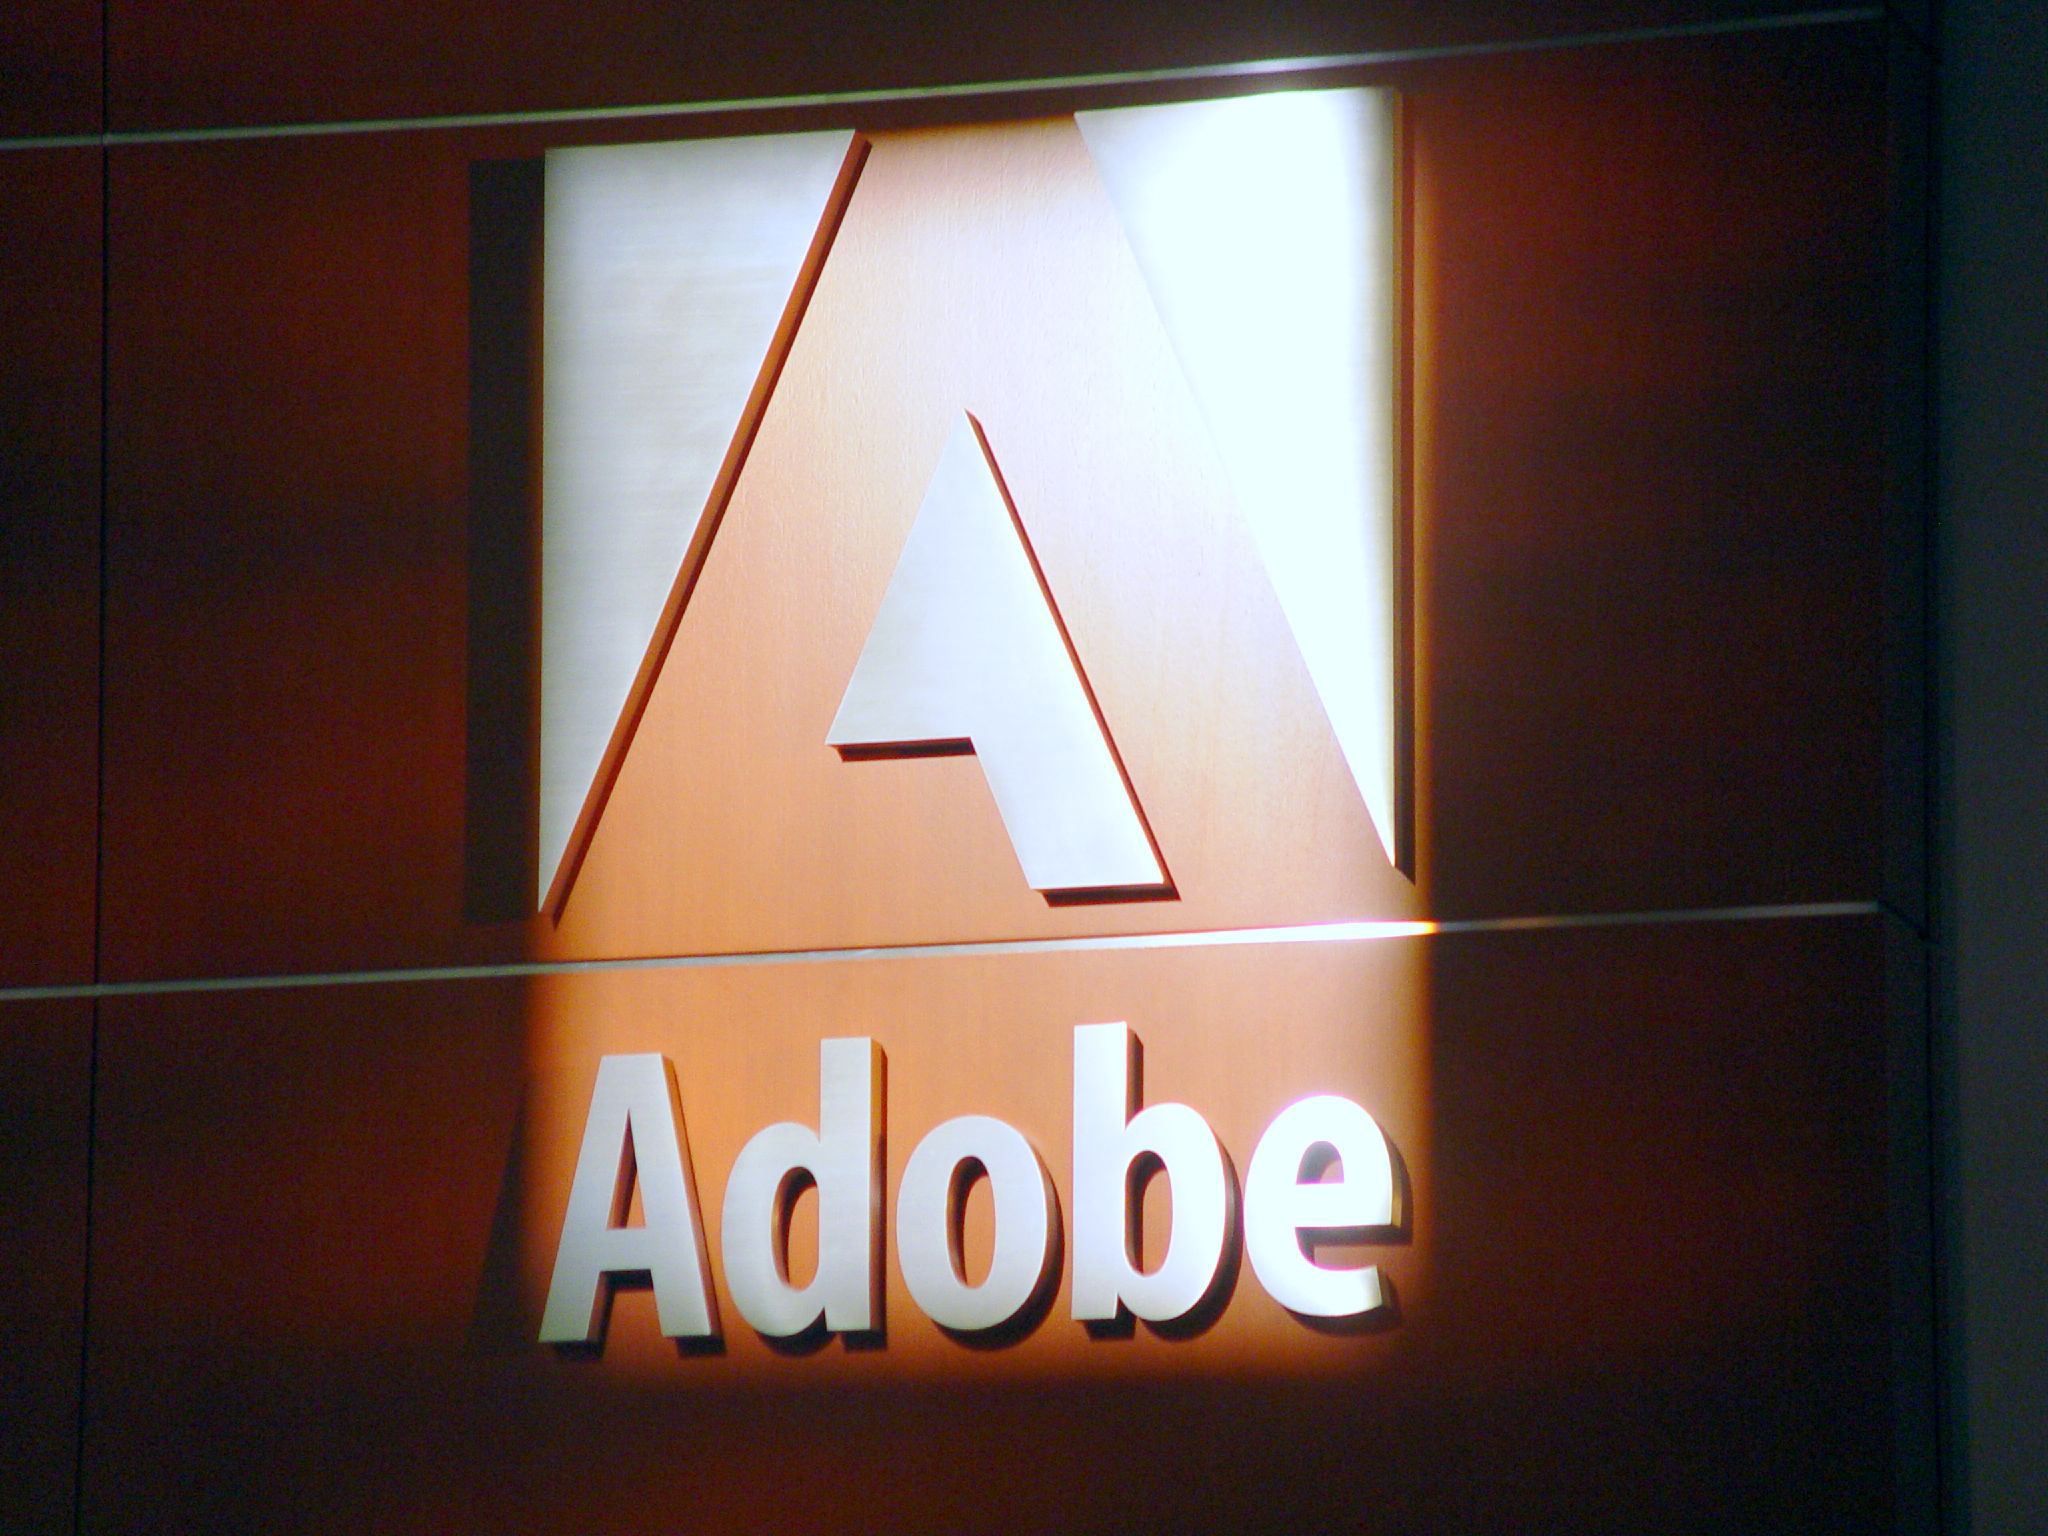 Adobe Video Software